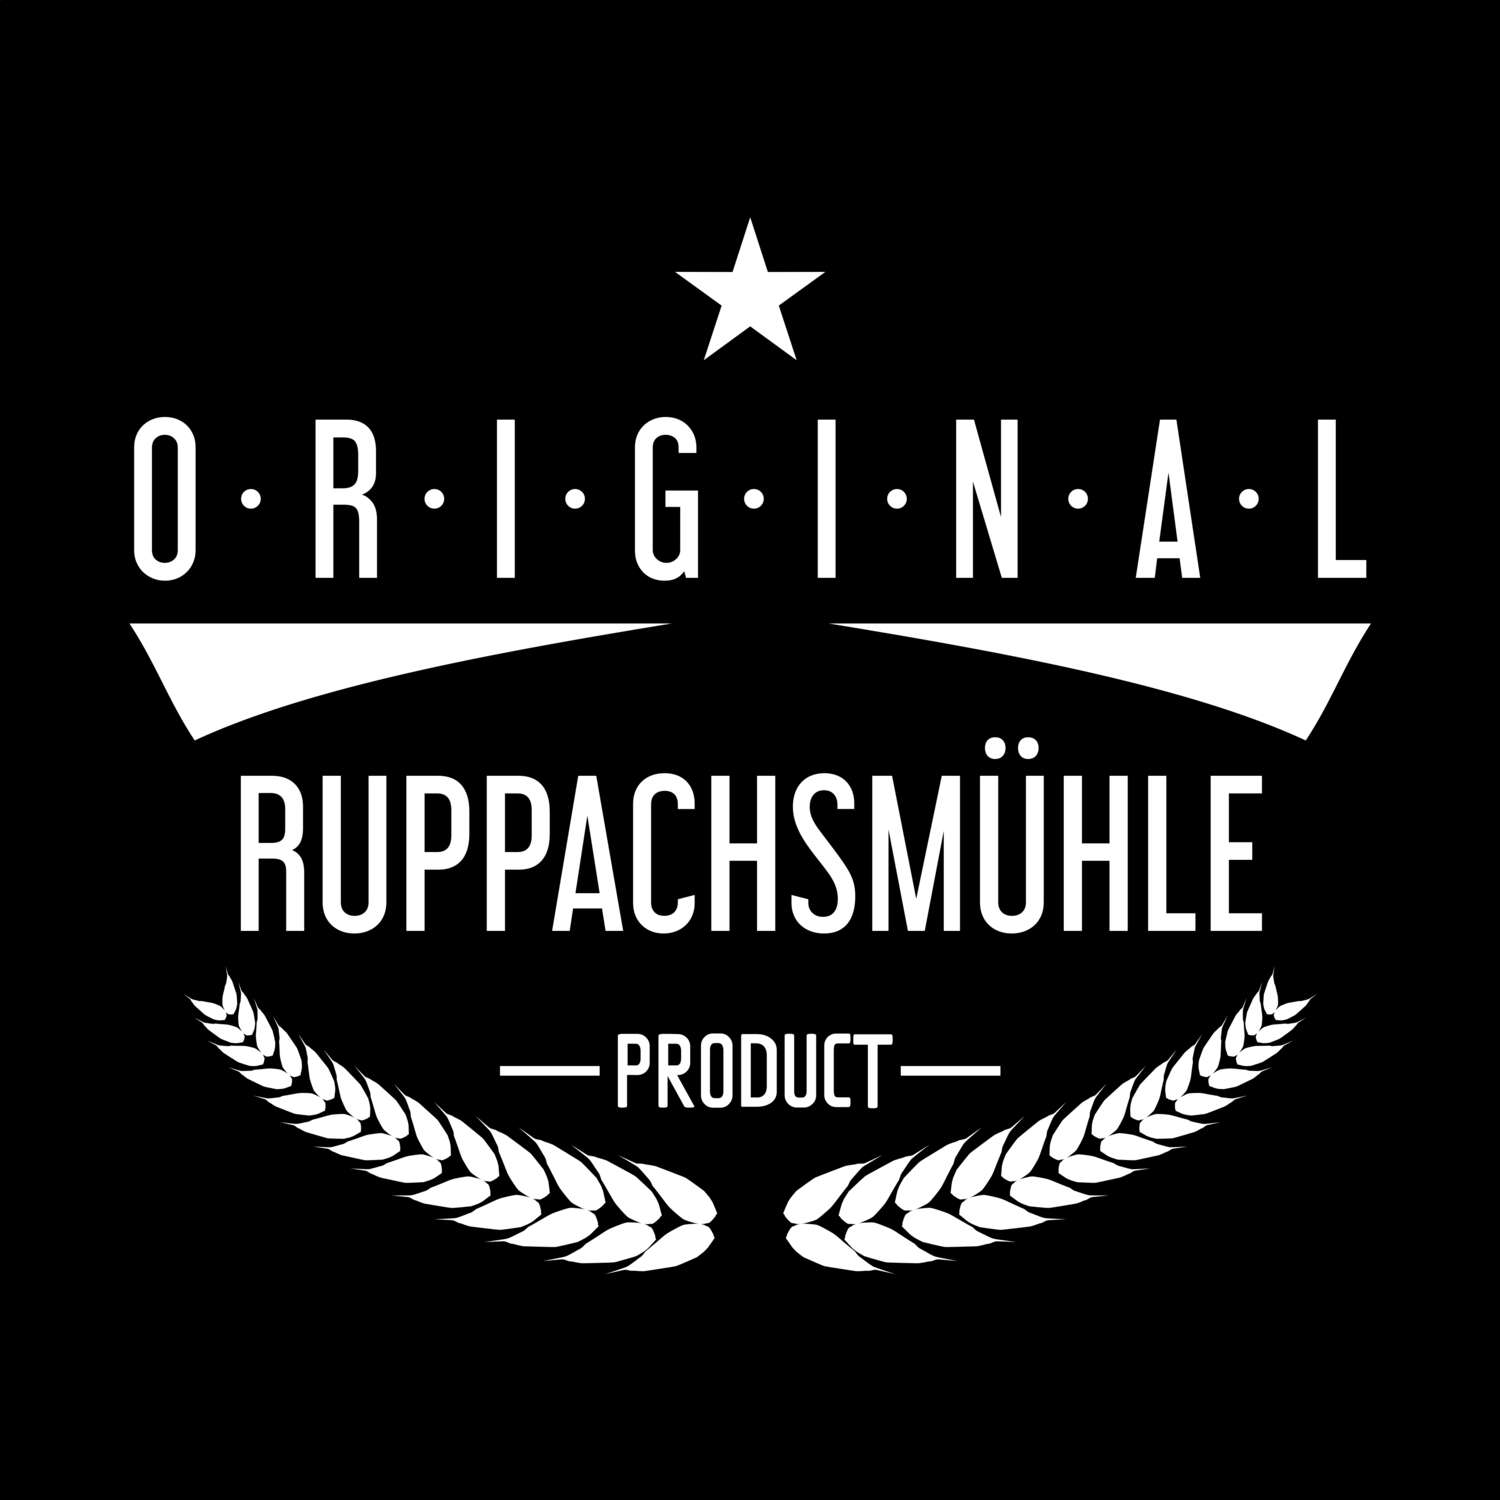 Ruppachsmühle T-Shirt »Original Product«